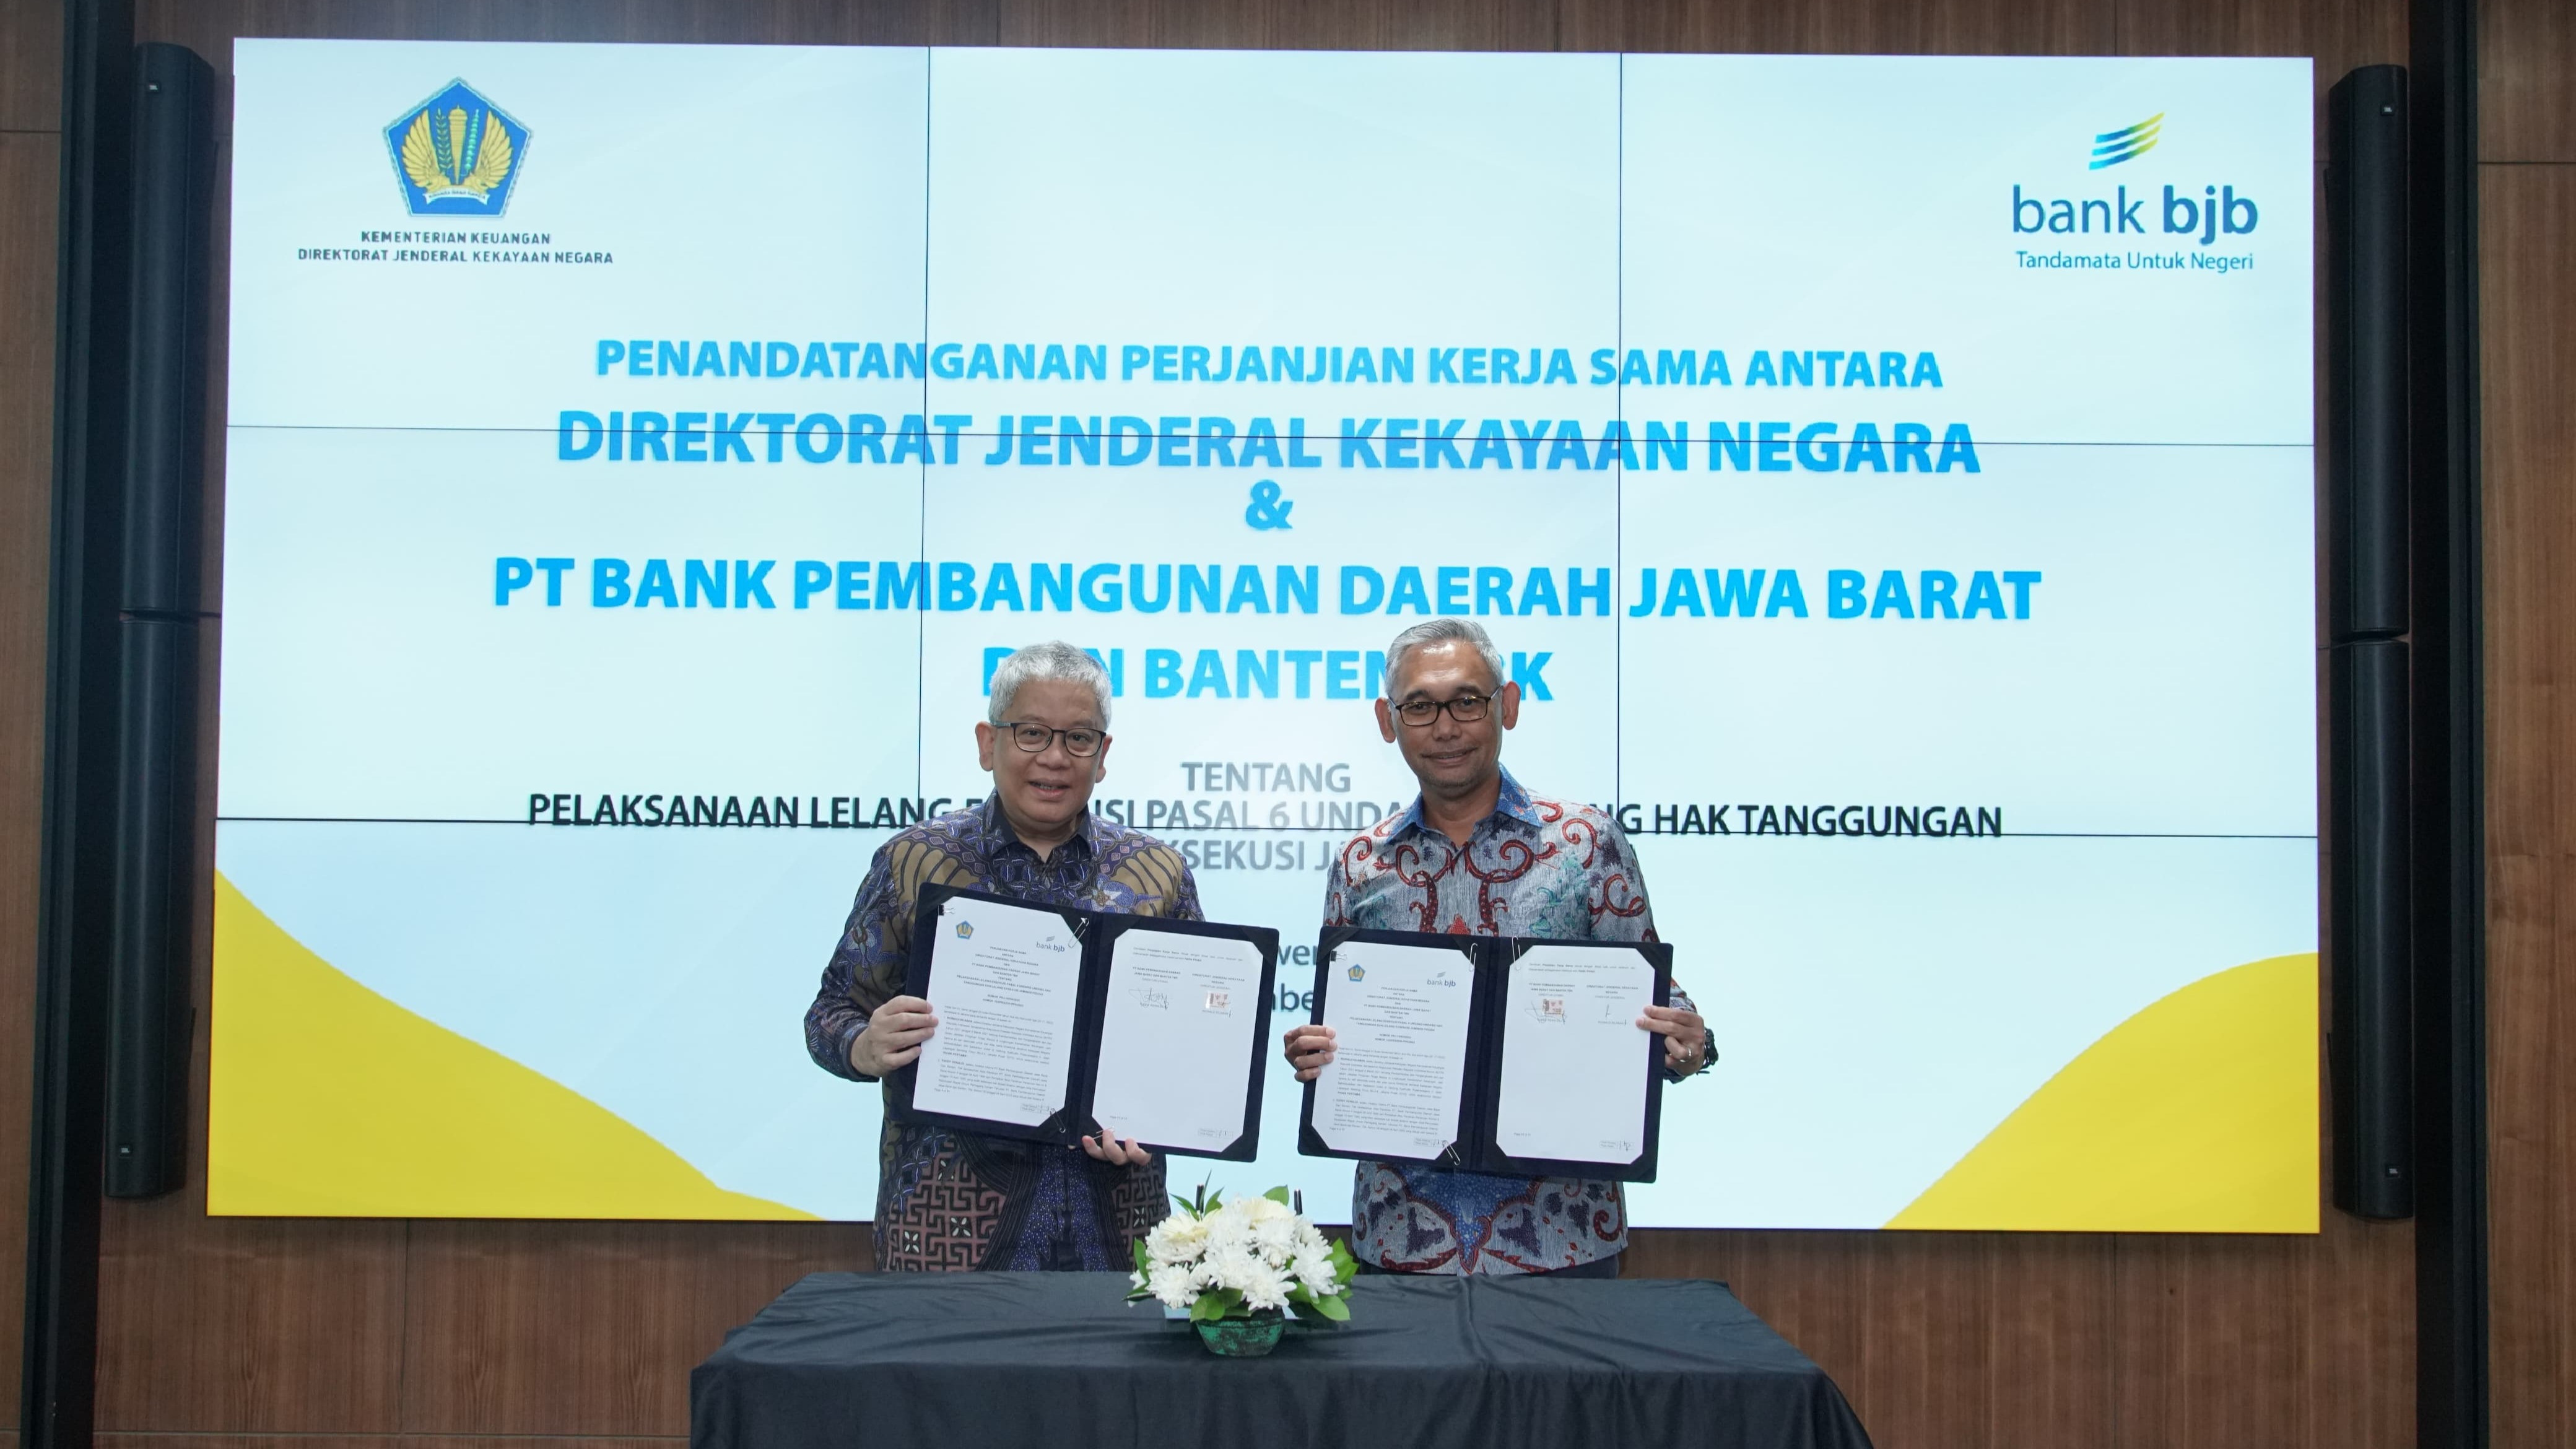 bank bjb menyepakati kerja sama pelaksanaan lelang aset sesuai pasal 6 UU Hak Tanggungan dan Lelang Eksekusi Jaminan Fidusia dengan Direktorat Jenderal Kekayaan Negara (DJKN) Kementerian Keuangan Republik Indonesia.